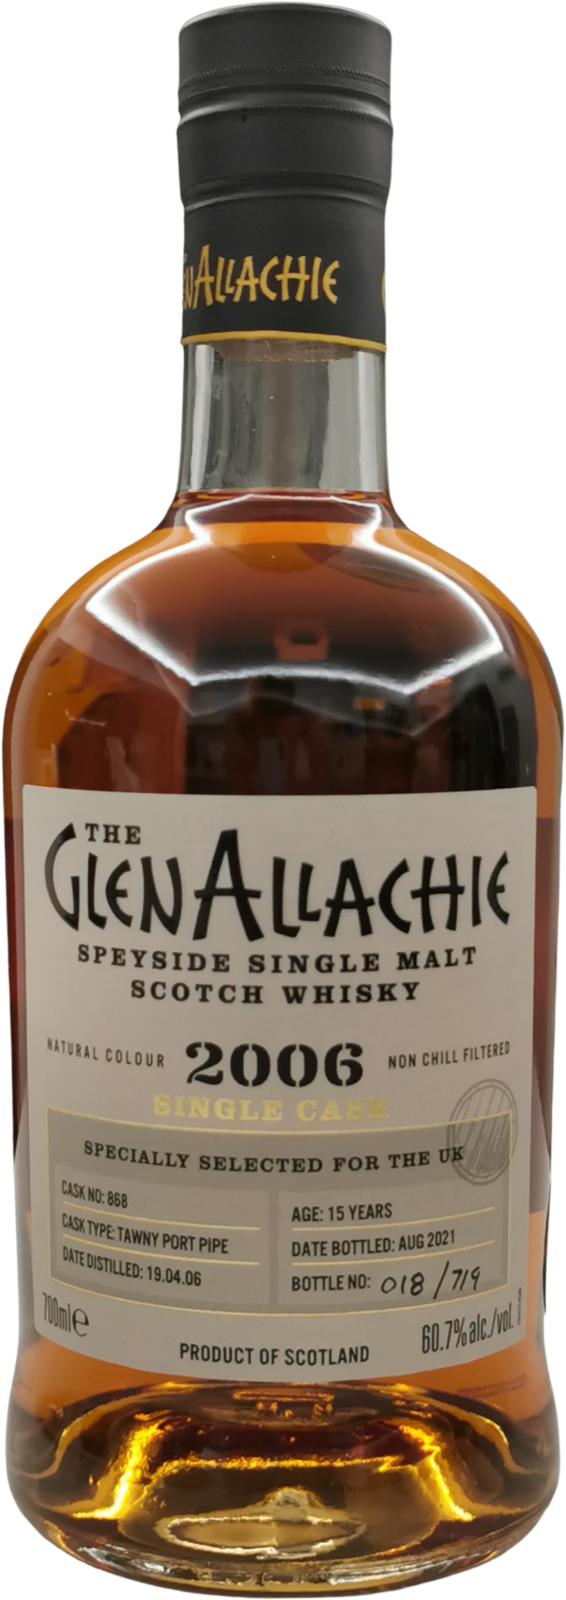 Glenallachie 2006 Tawny Port Pipe UK exclusive 60.7% 700ml